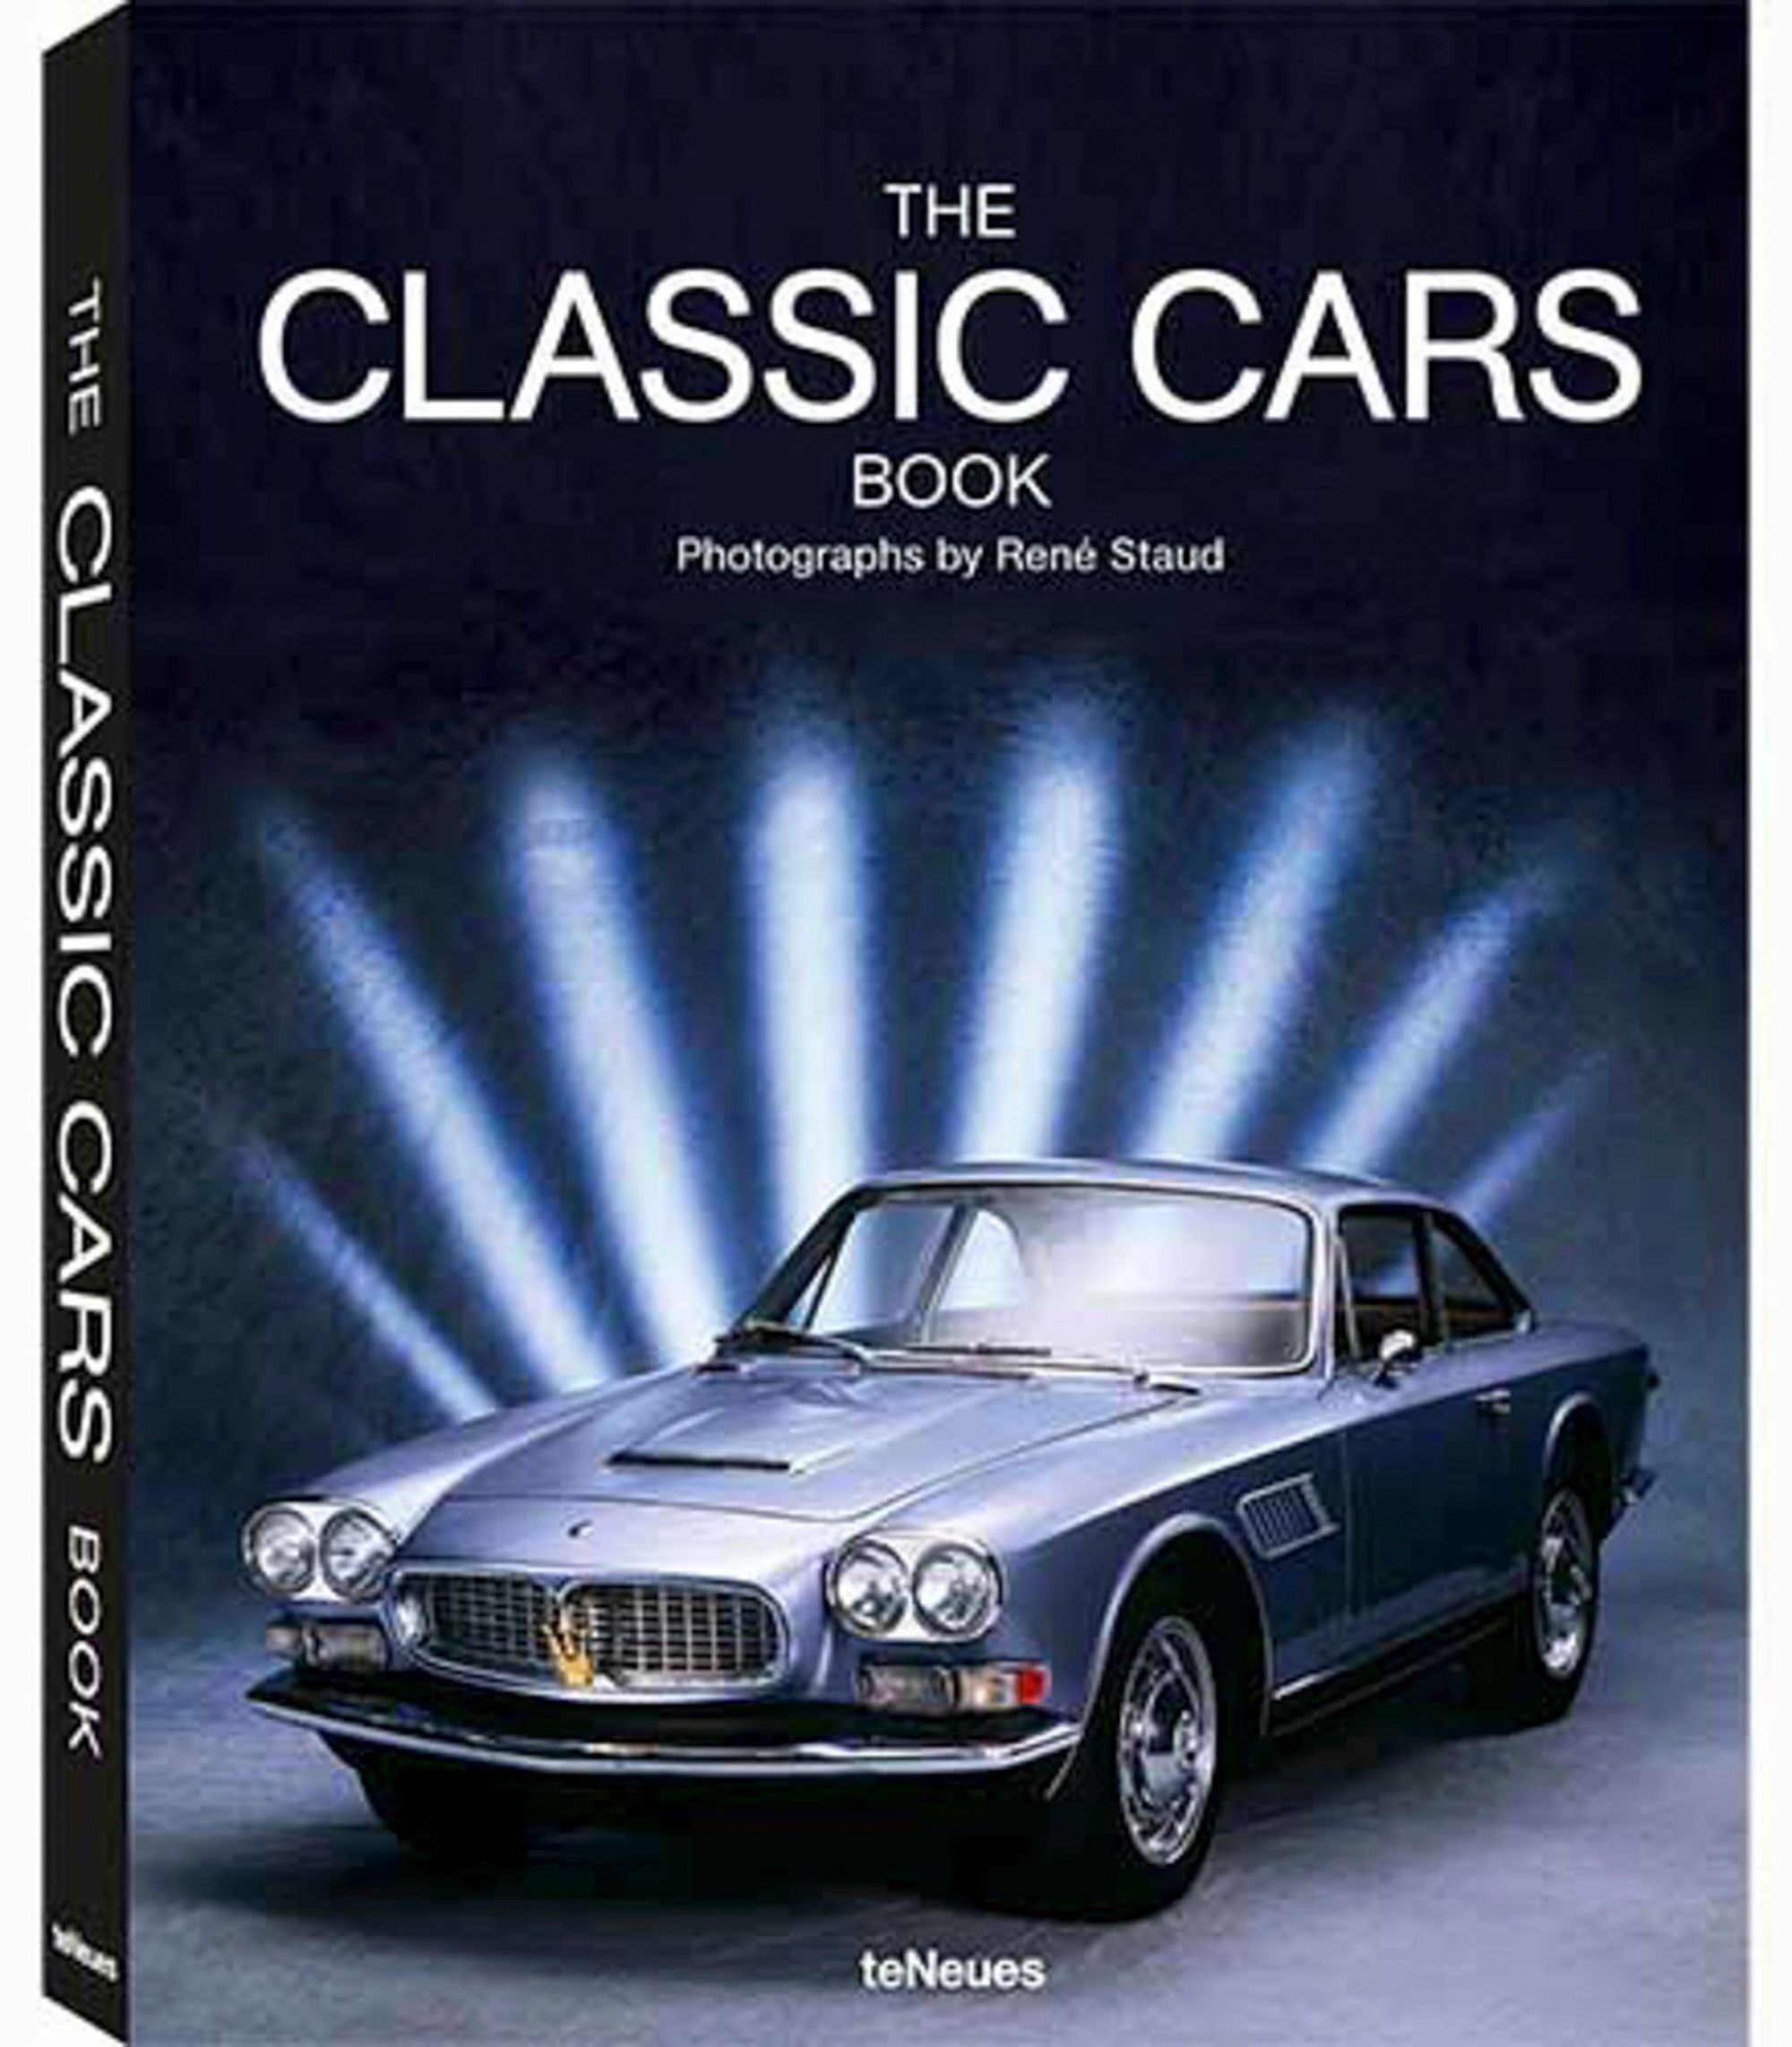 TeNeues The Classic Cars Boek NVT 087119-001-0